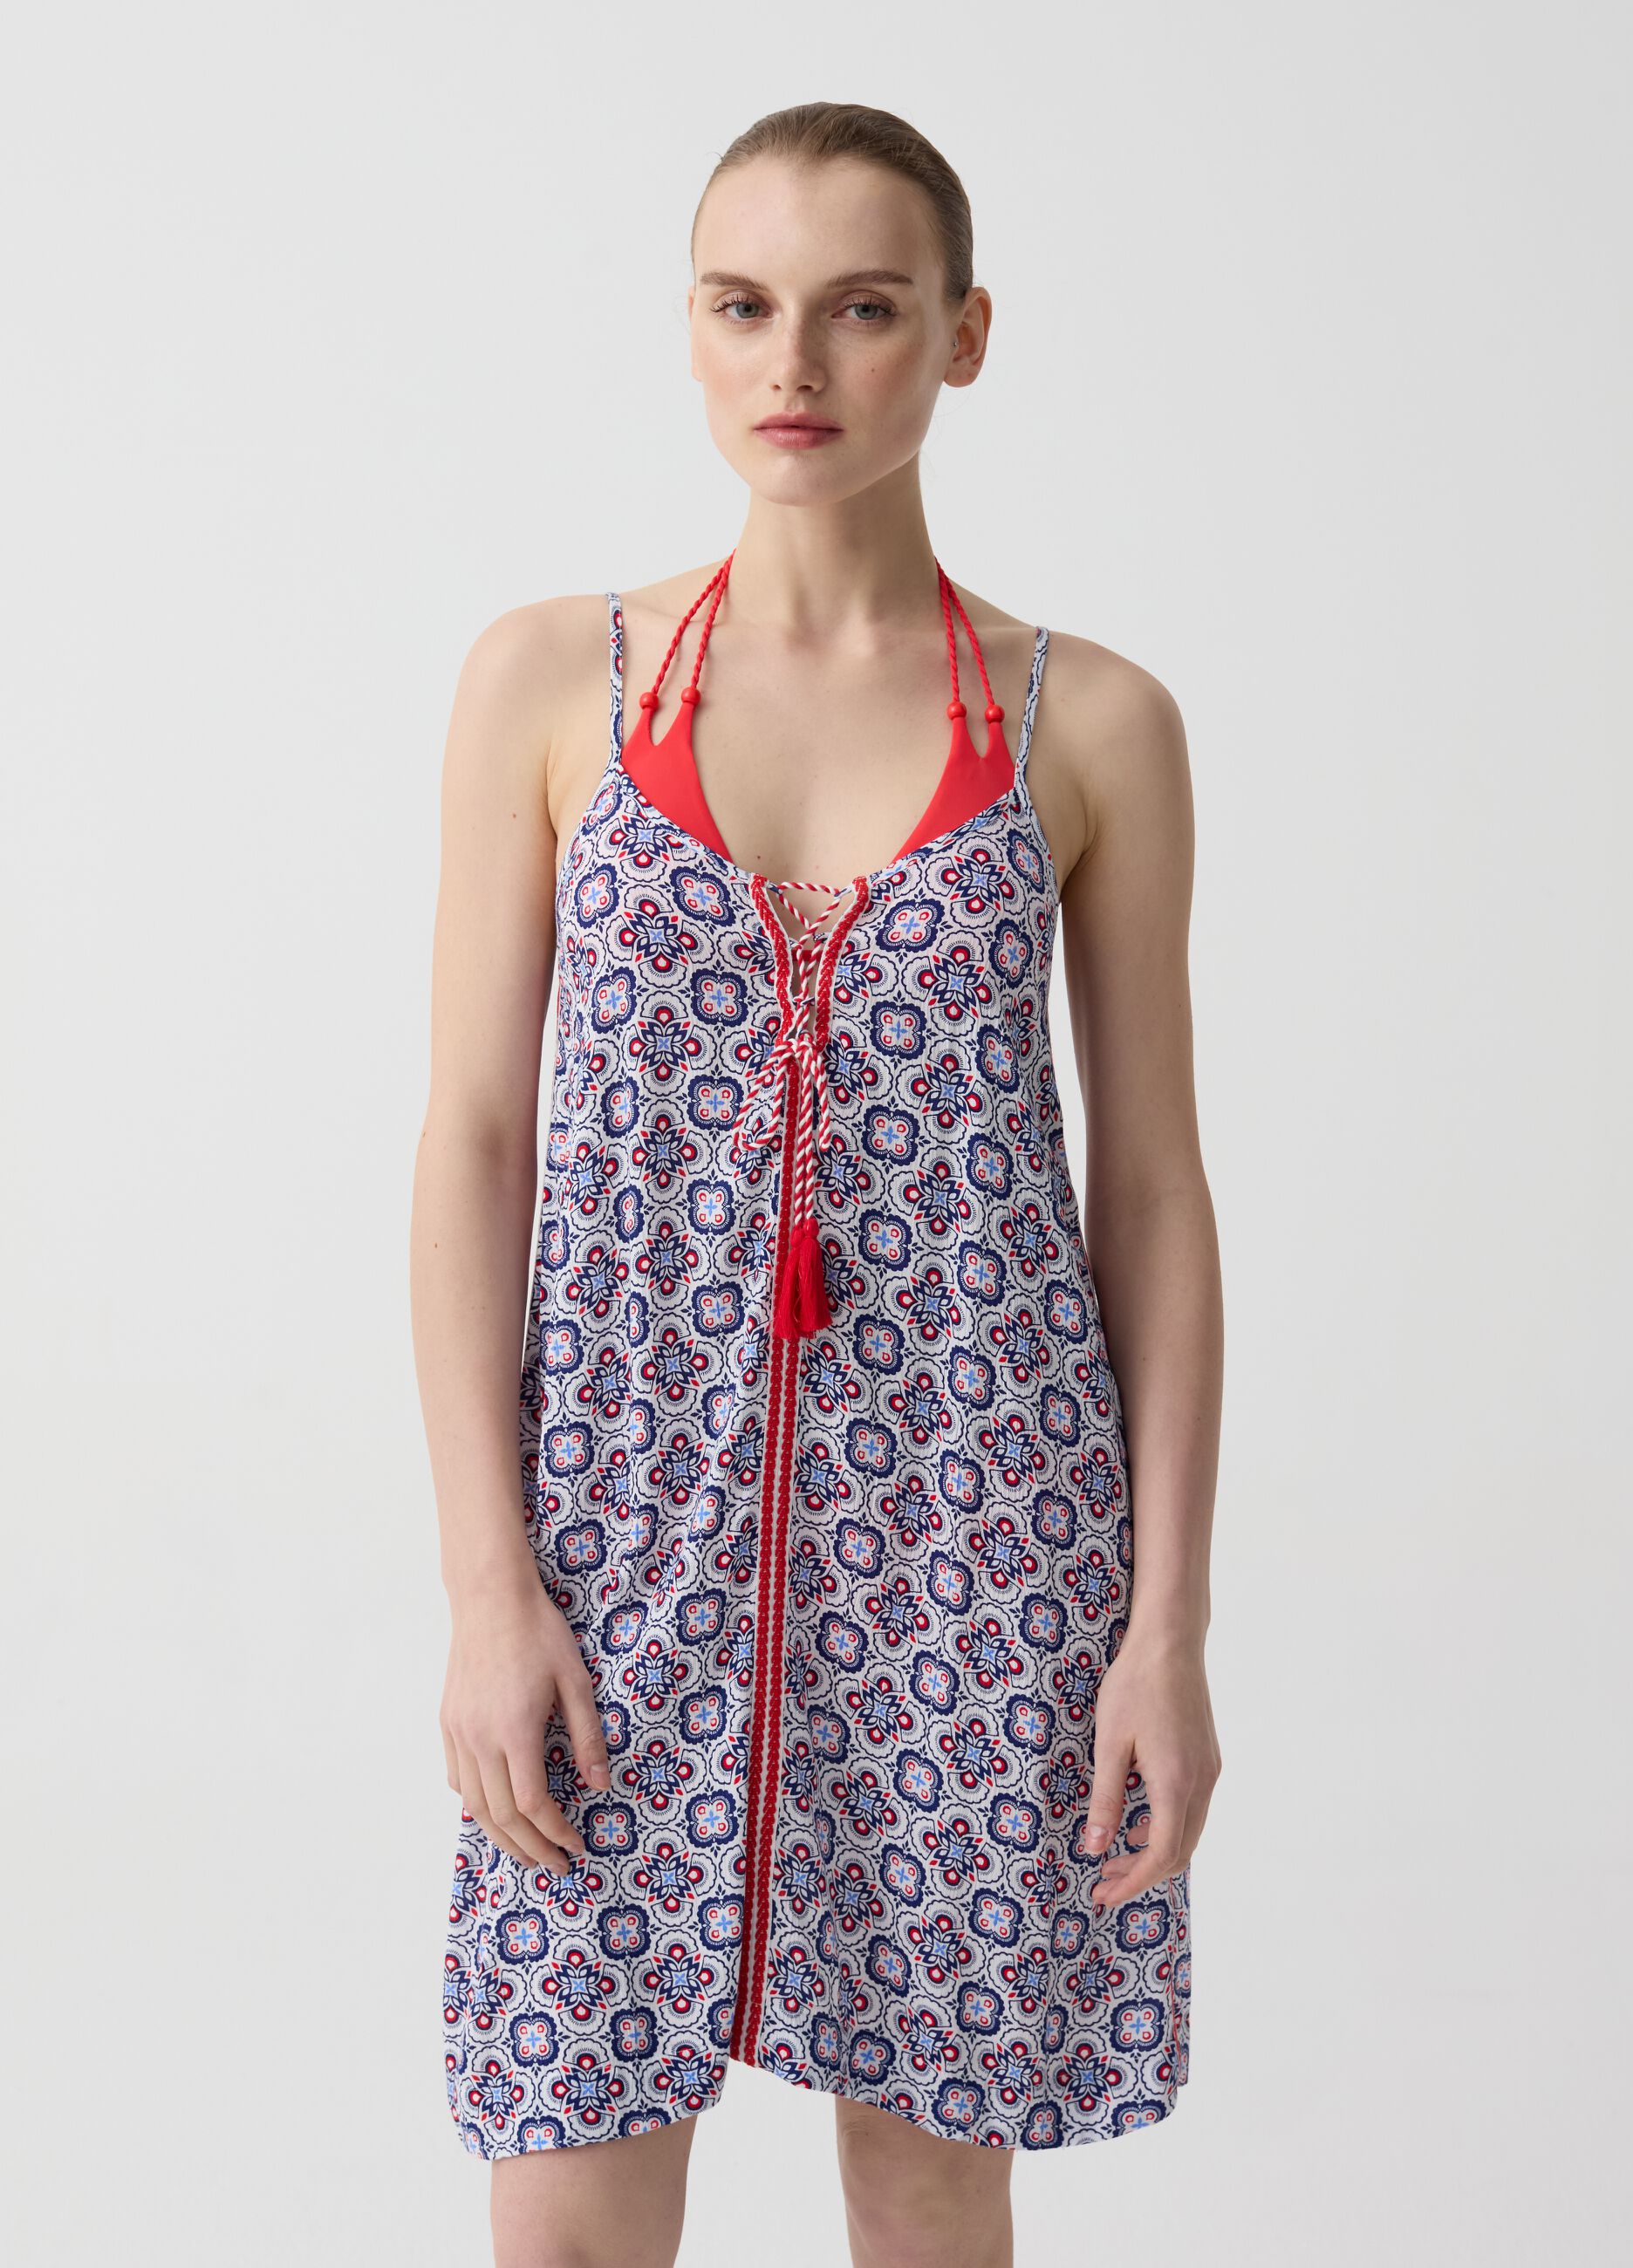 Positano summer dress with print